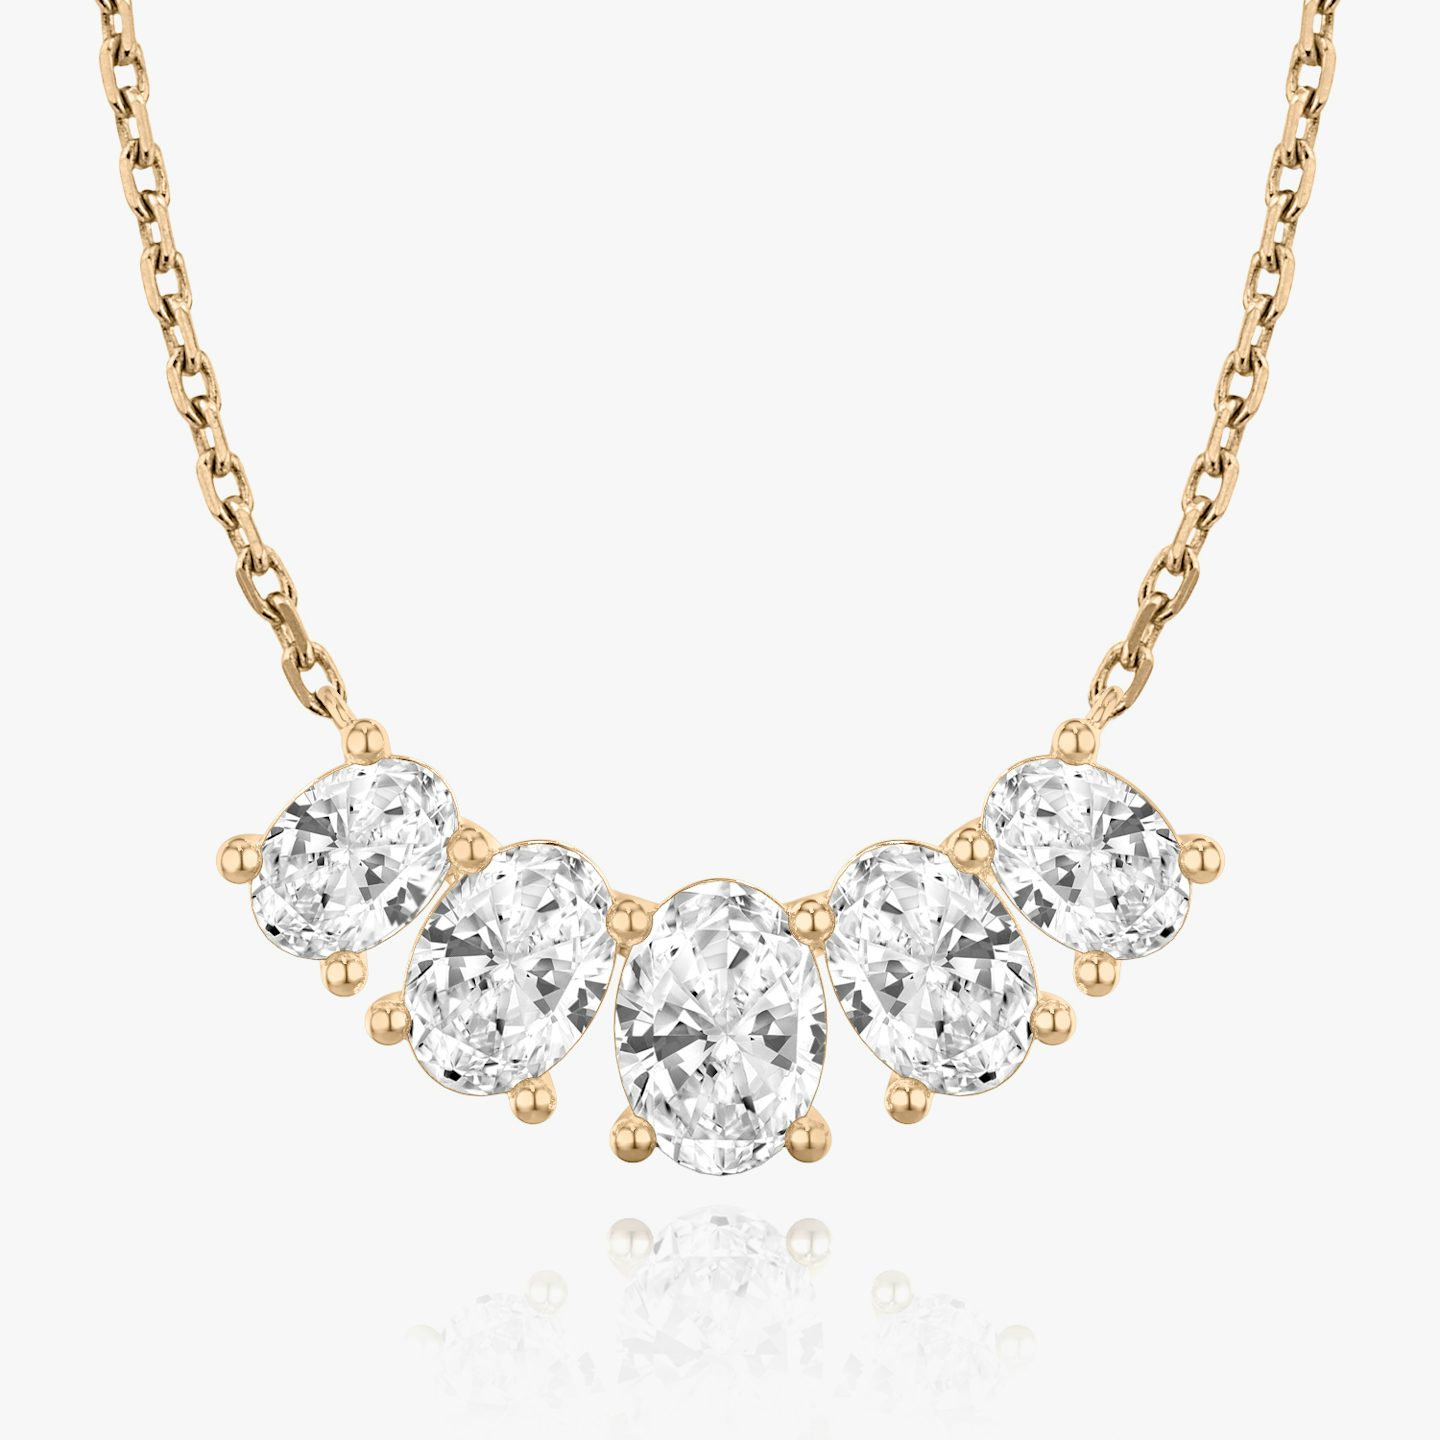 Arc Necklace | Oval | 14k | 14k Rose Gold | Chain length: 16-18 | Diamond size: Large | Diamond count: 5